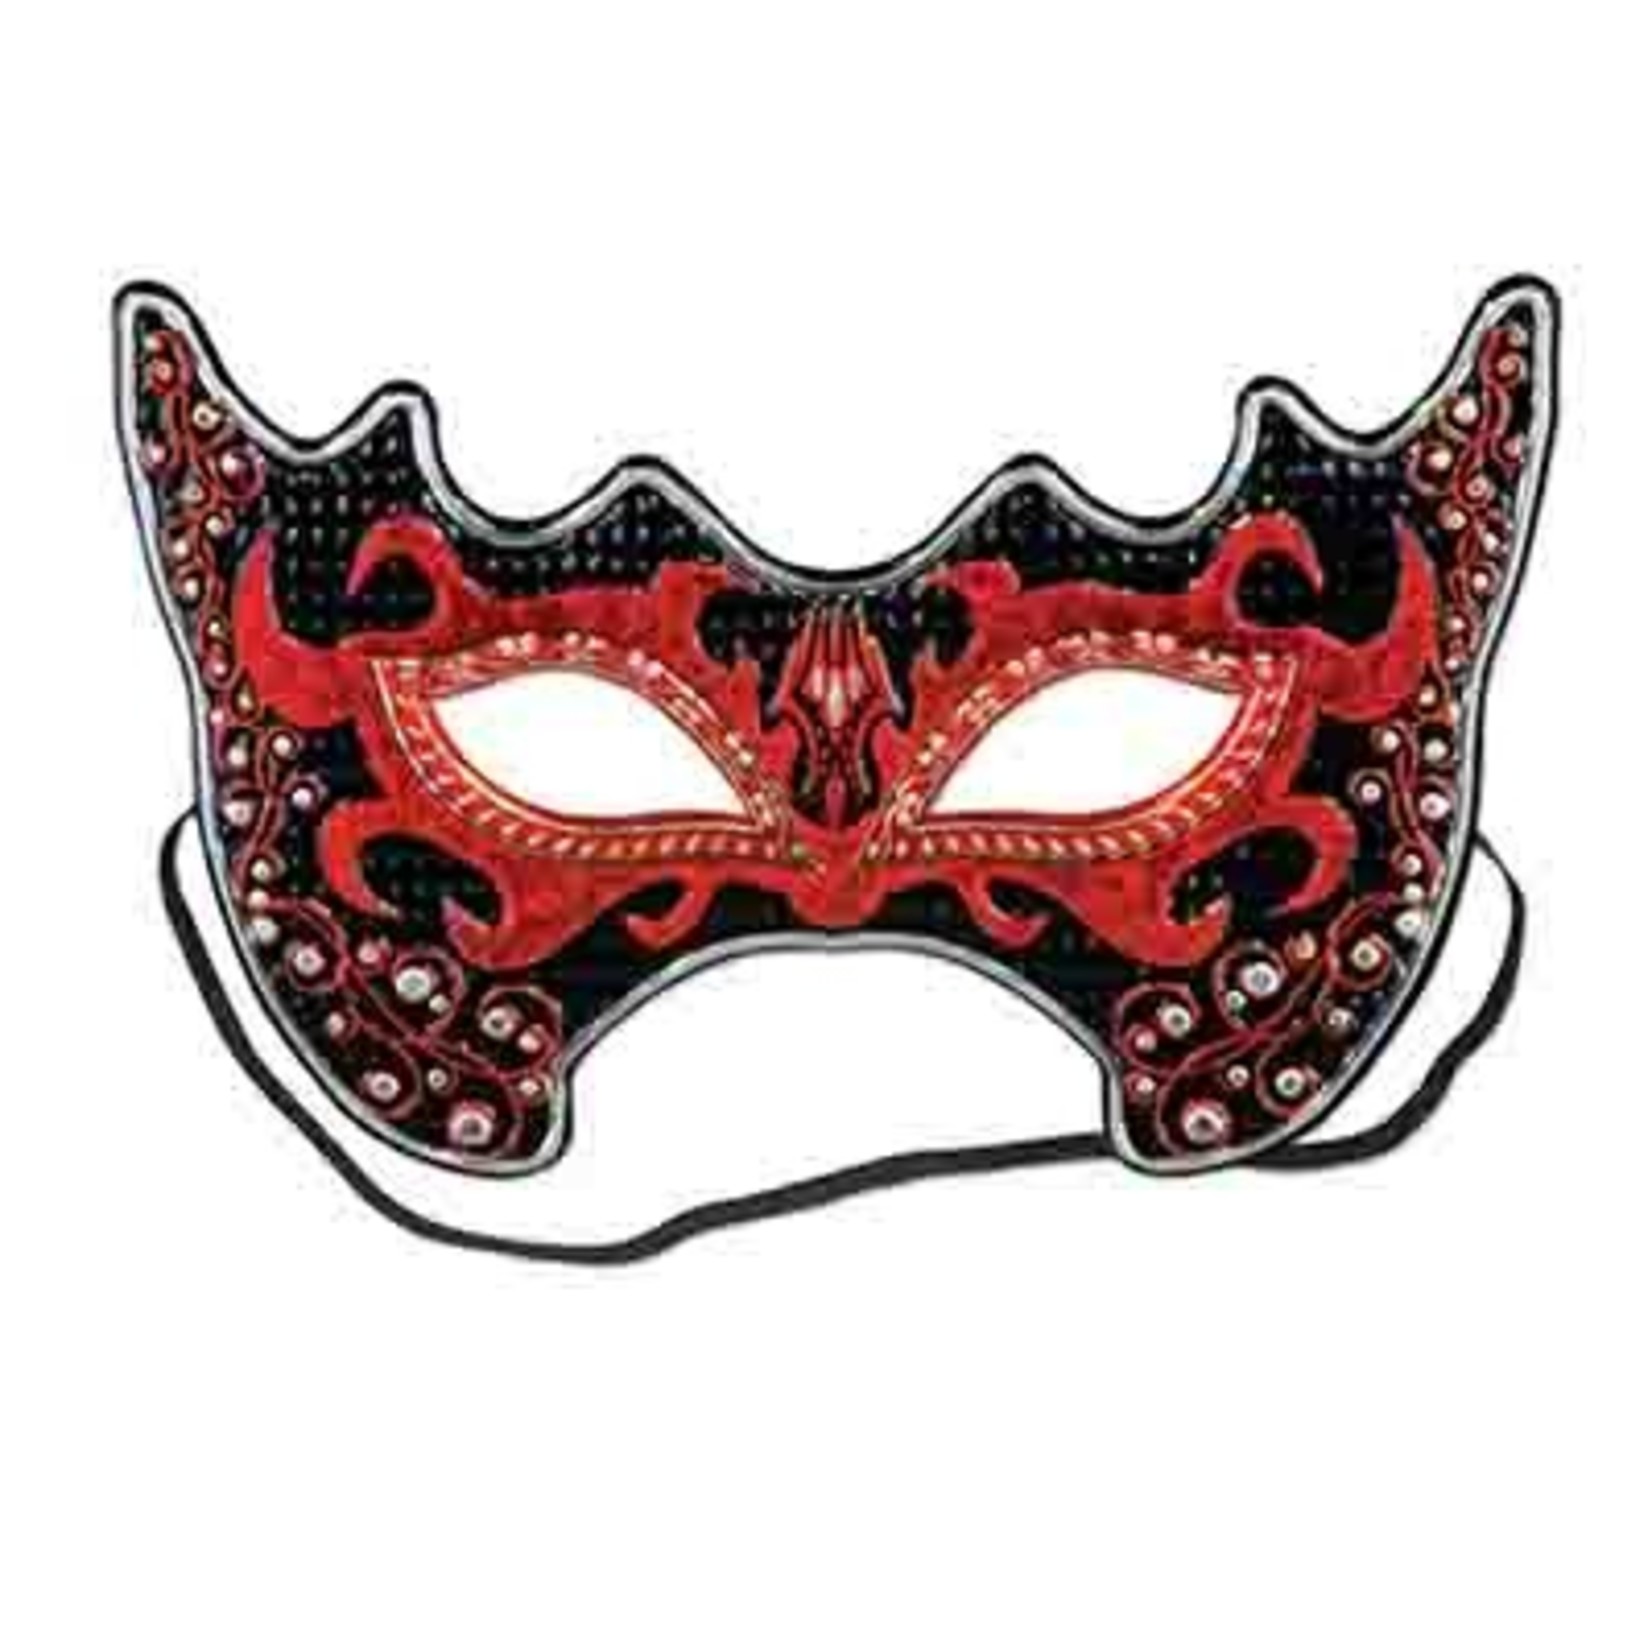 Beistle Black & Red Masquerade Costume Mask - 1ct.